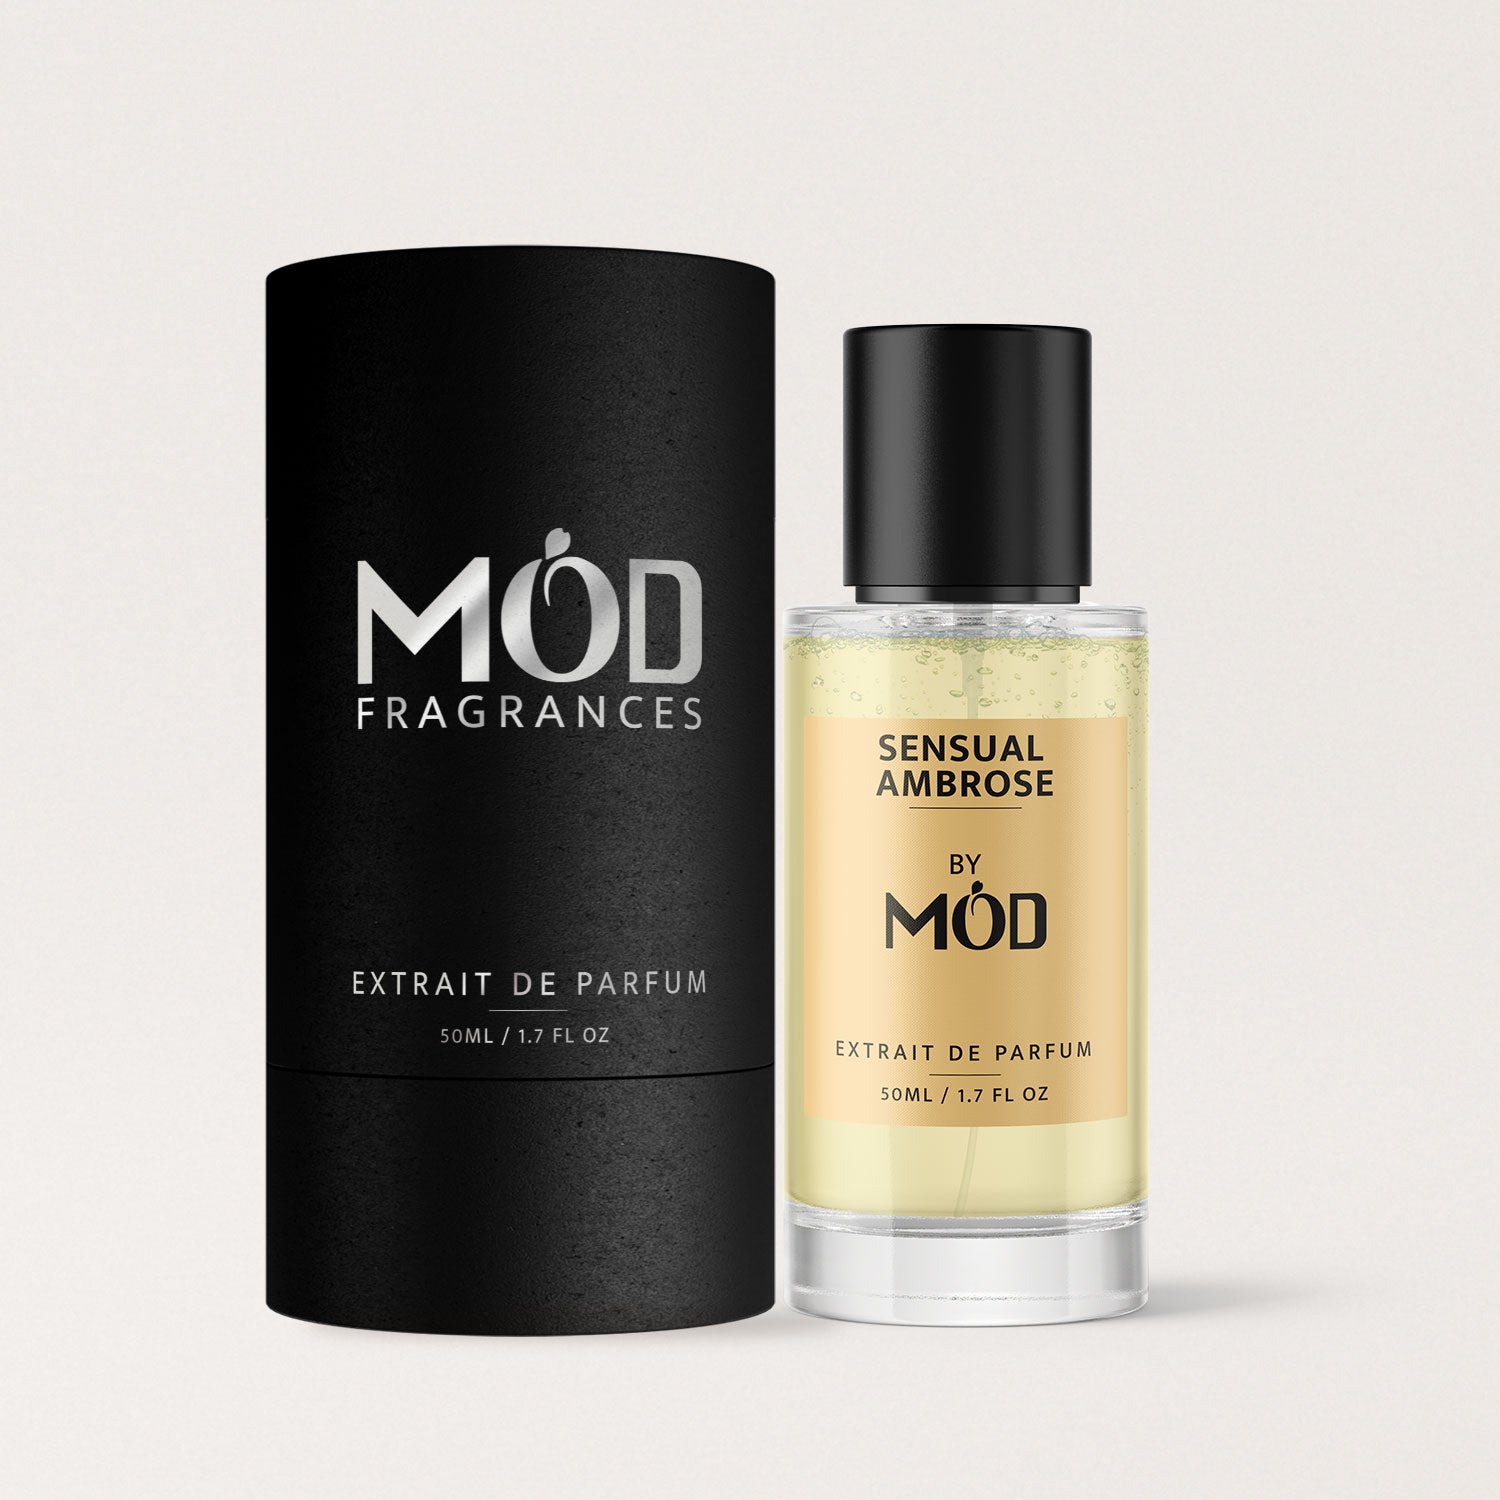 Sensual Ambrose - Mod Fragrances